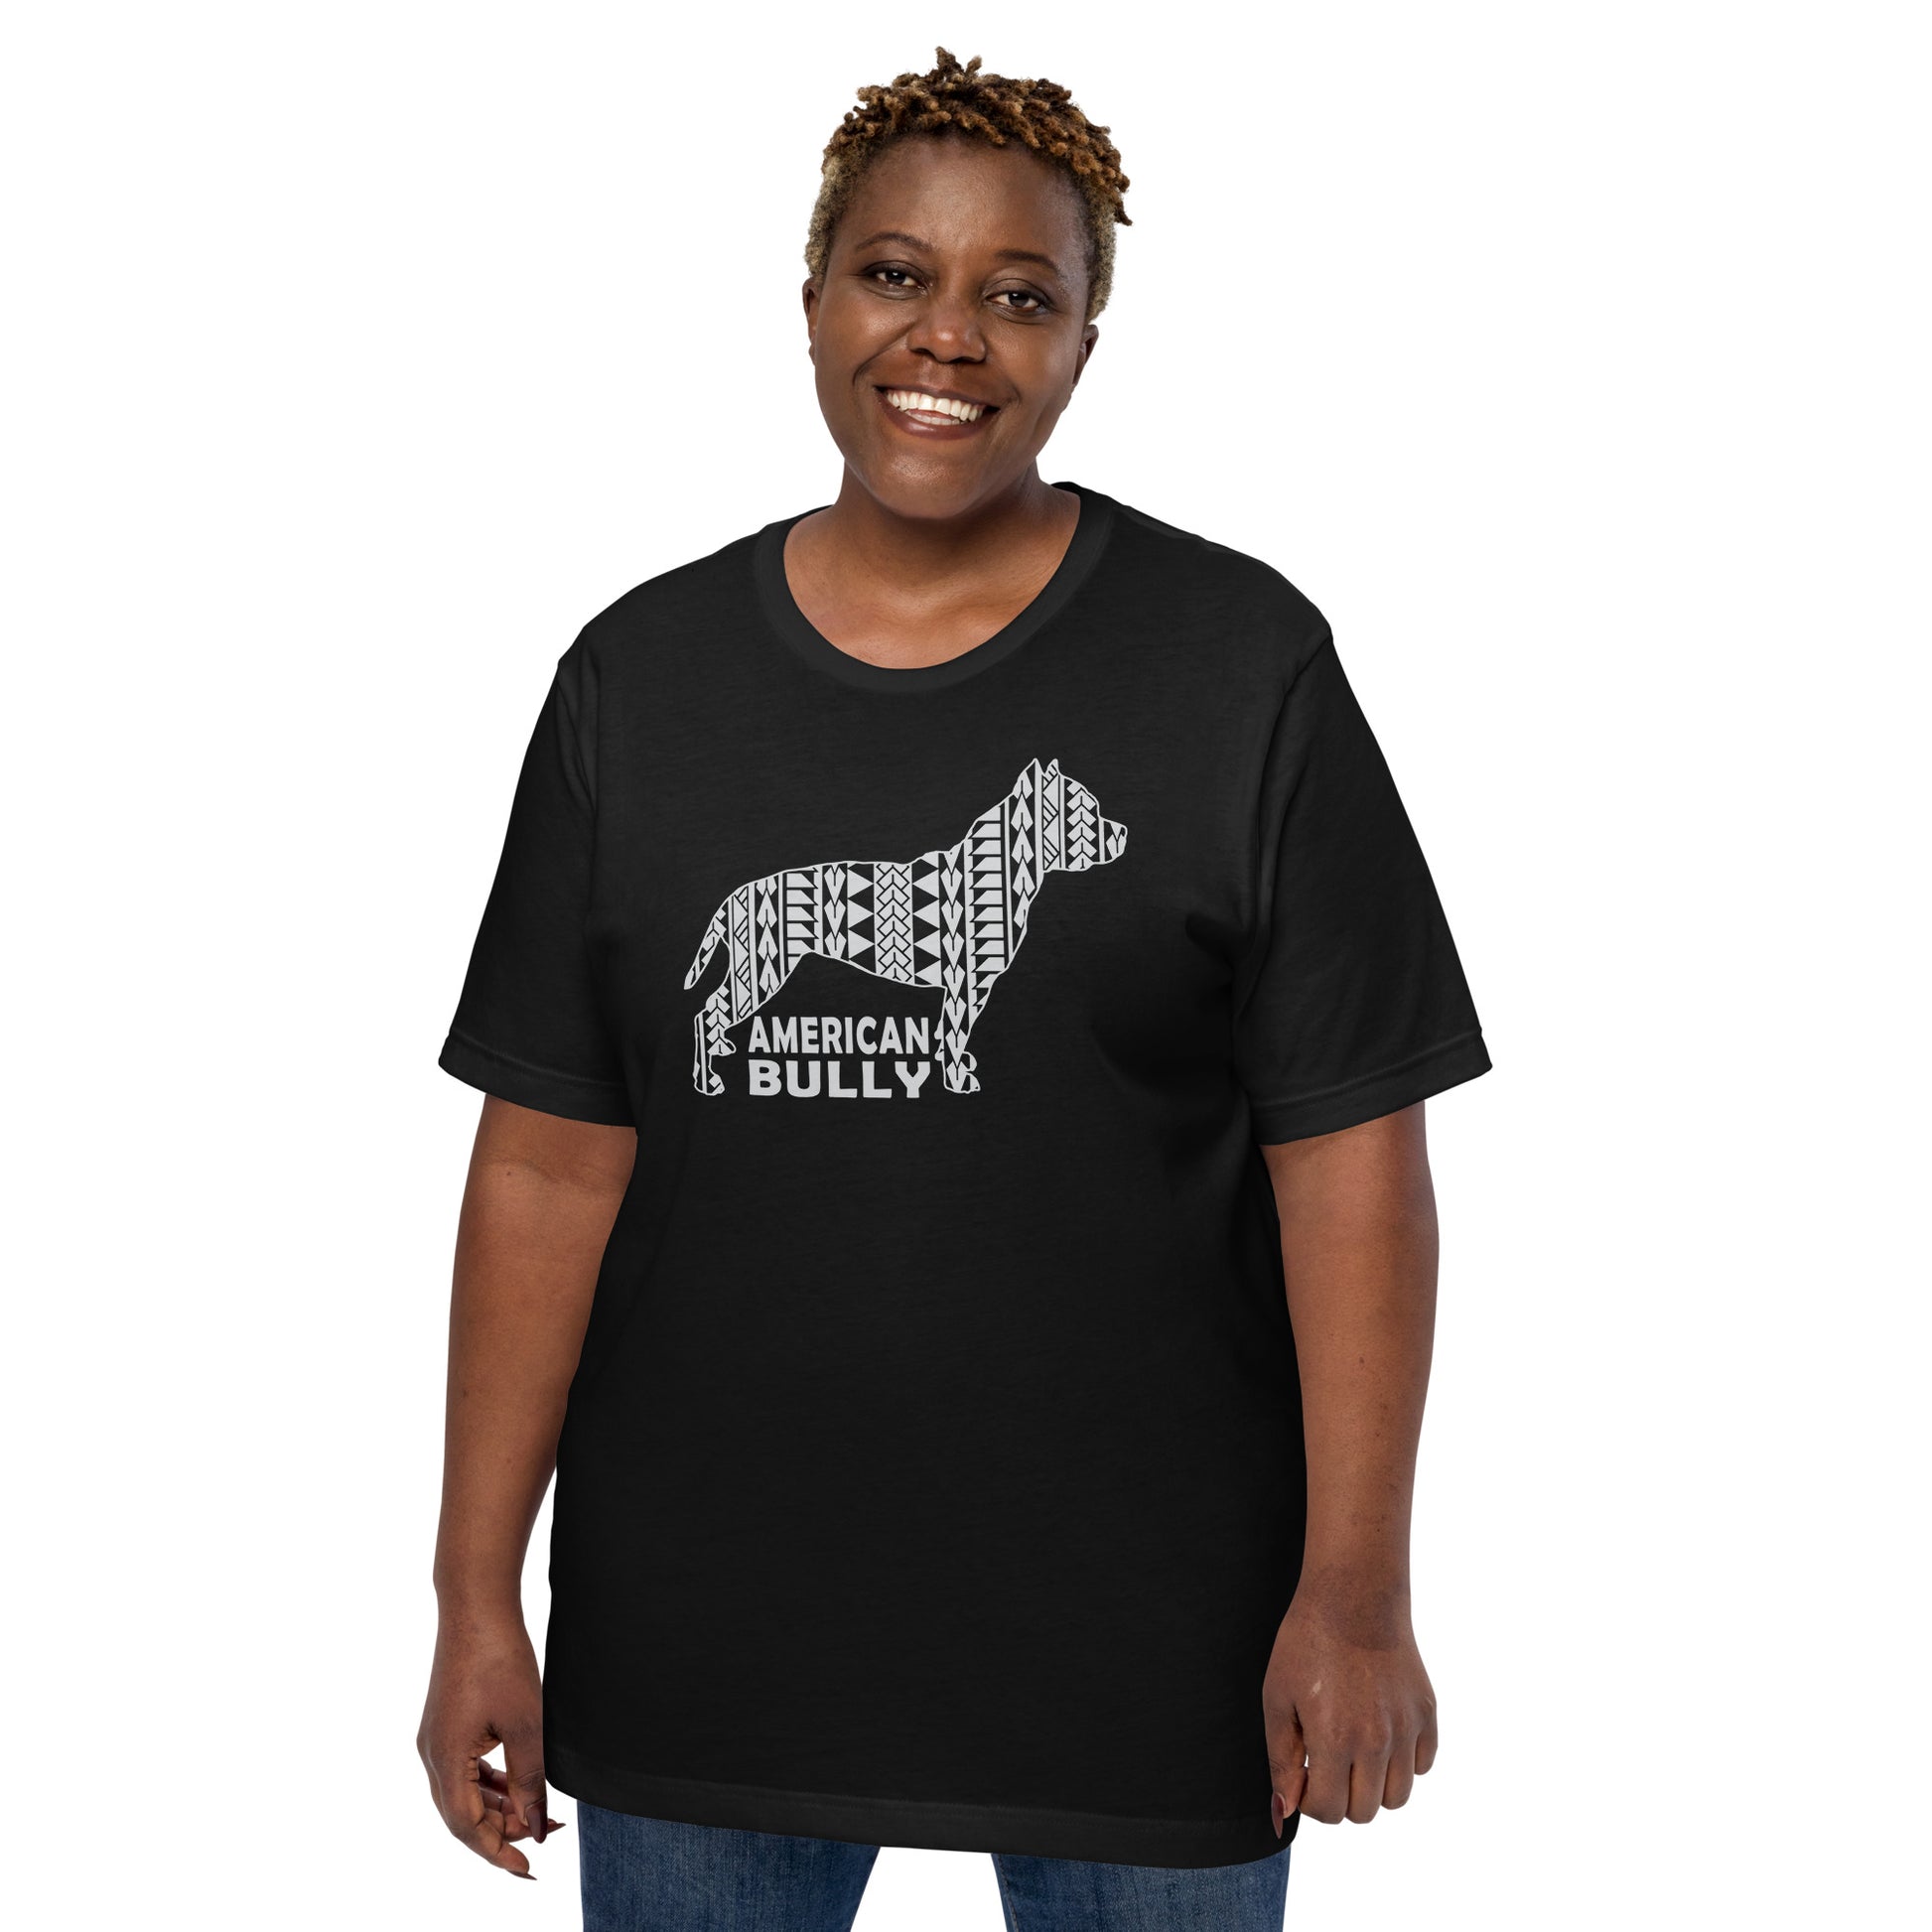 American Bully Polynesian t-shirt black by Dog Artistry.